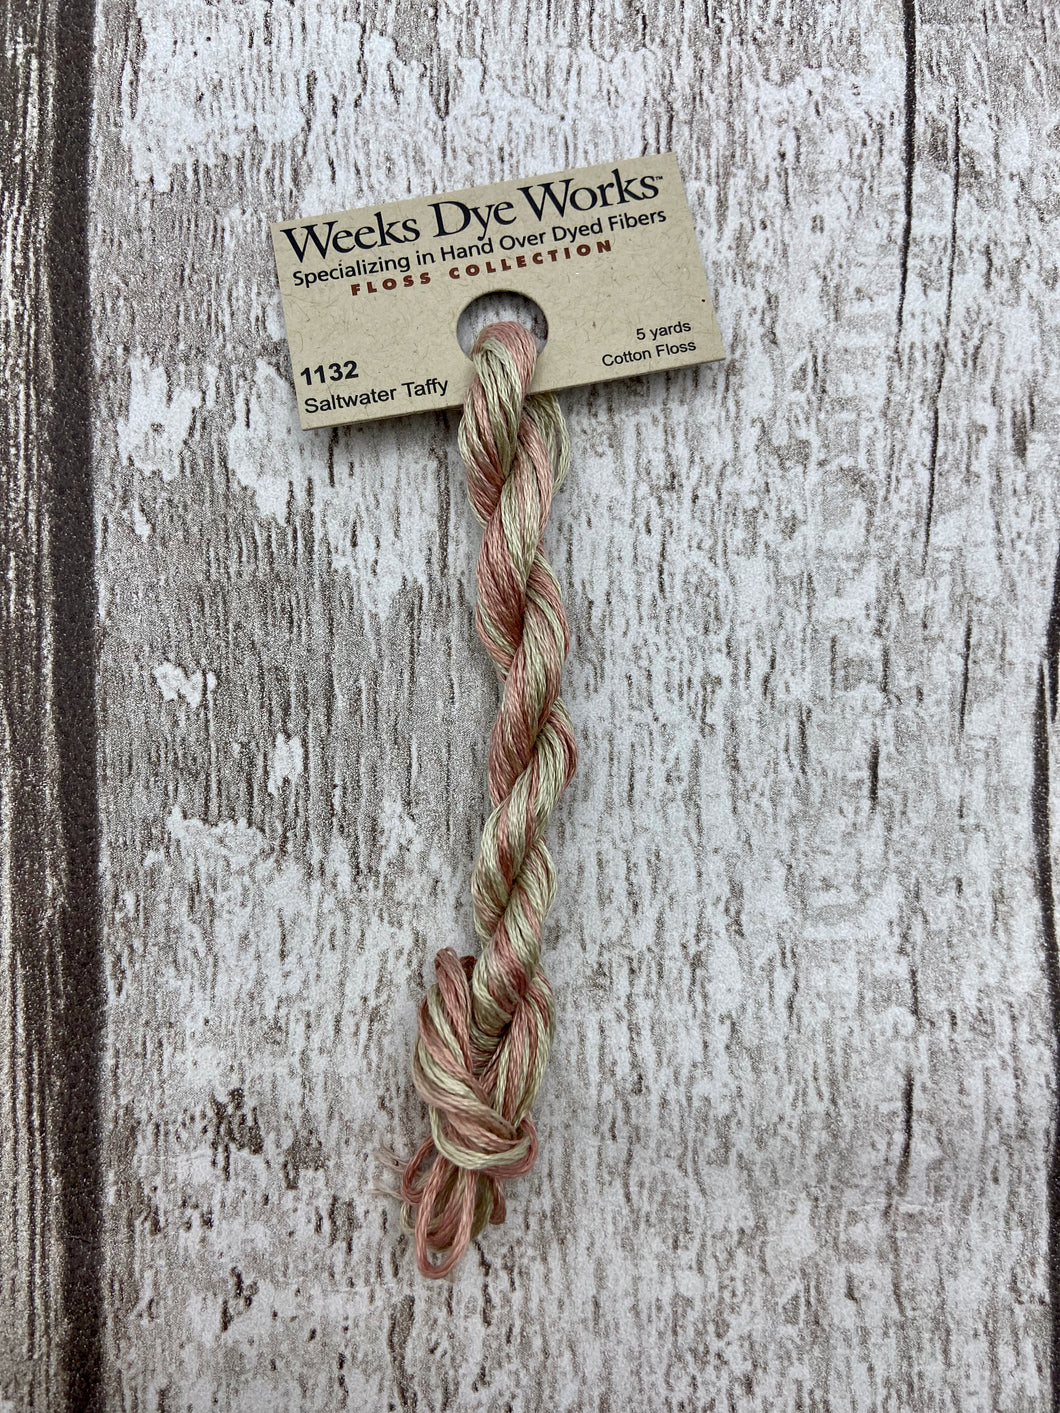 Saltwater Taffy (#1132), Weeks Dye Works 6-strand cotton floss